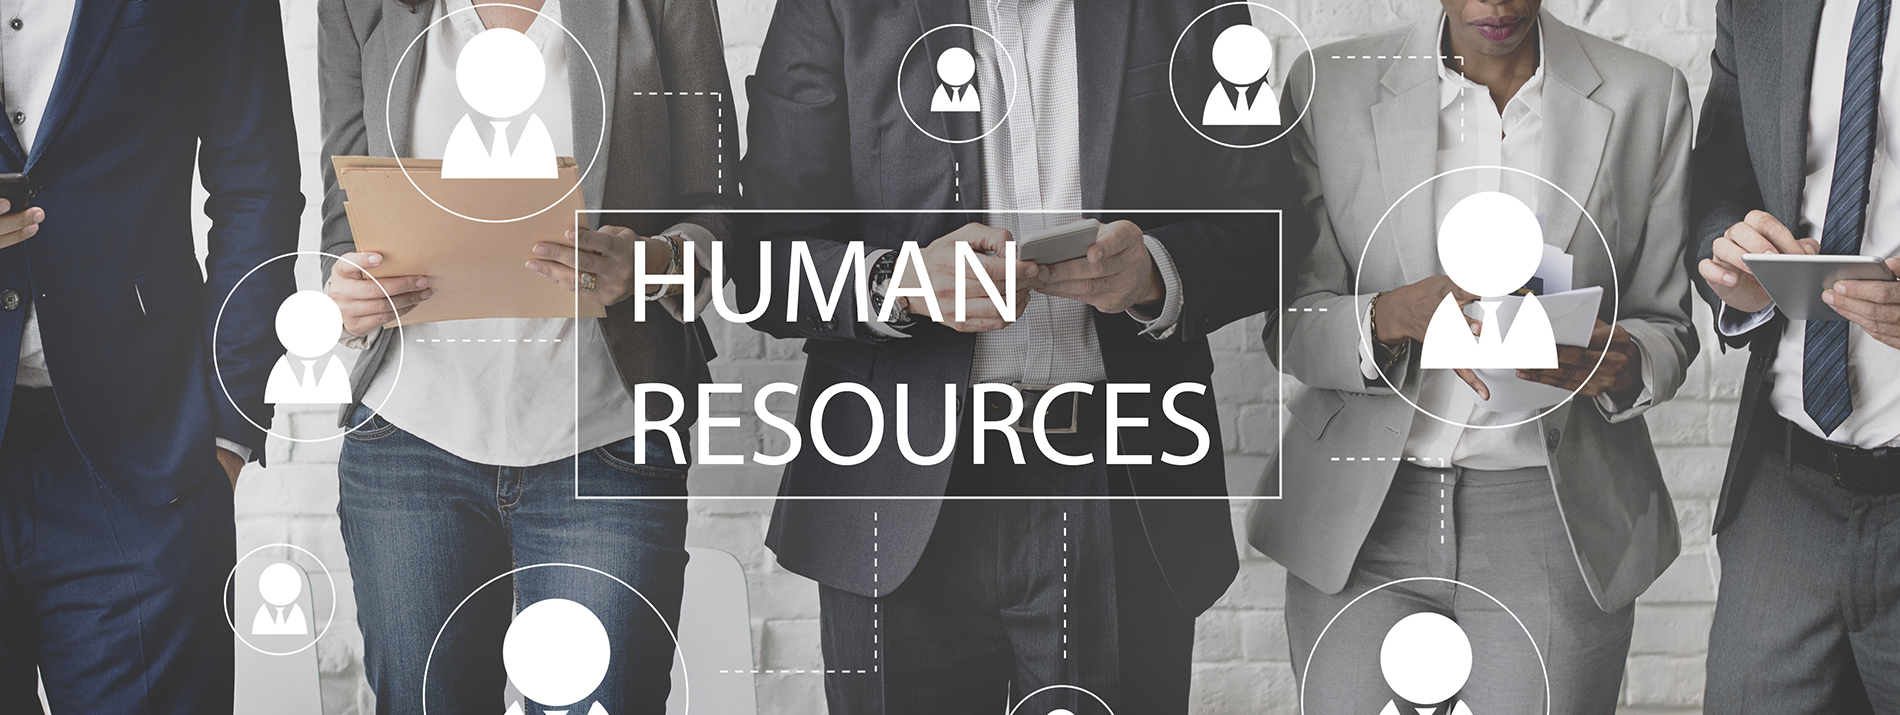 impact-hr-human-resources.jpg